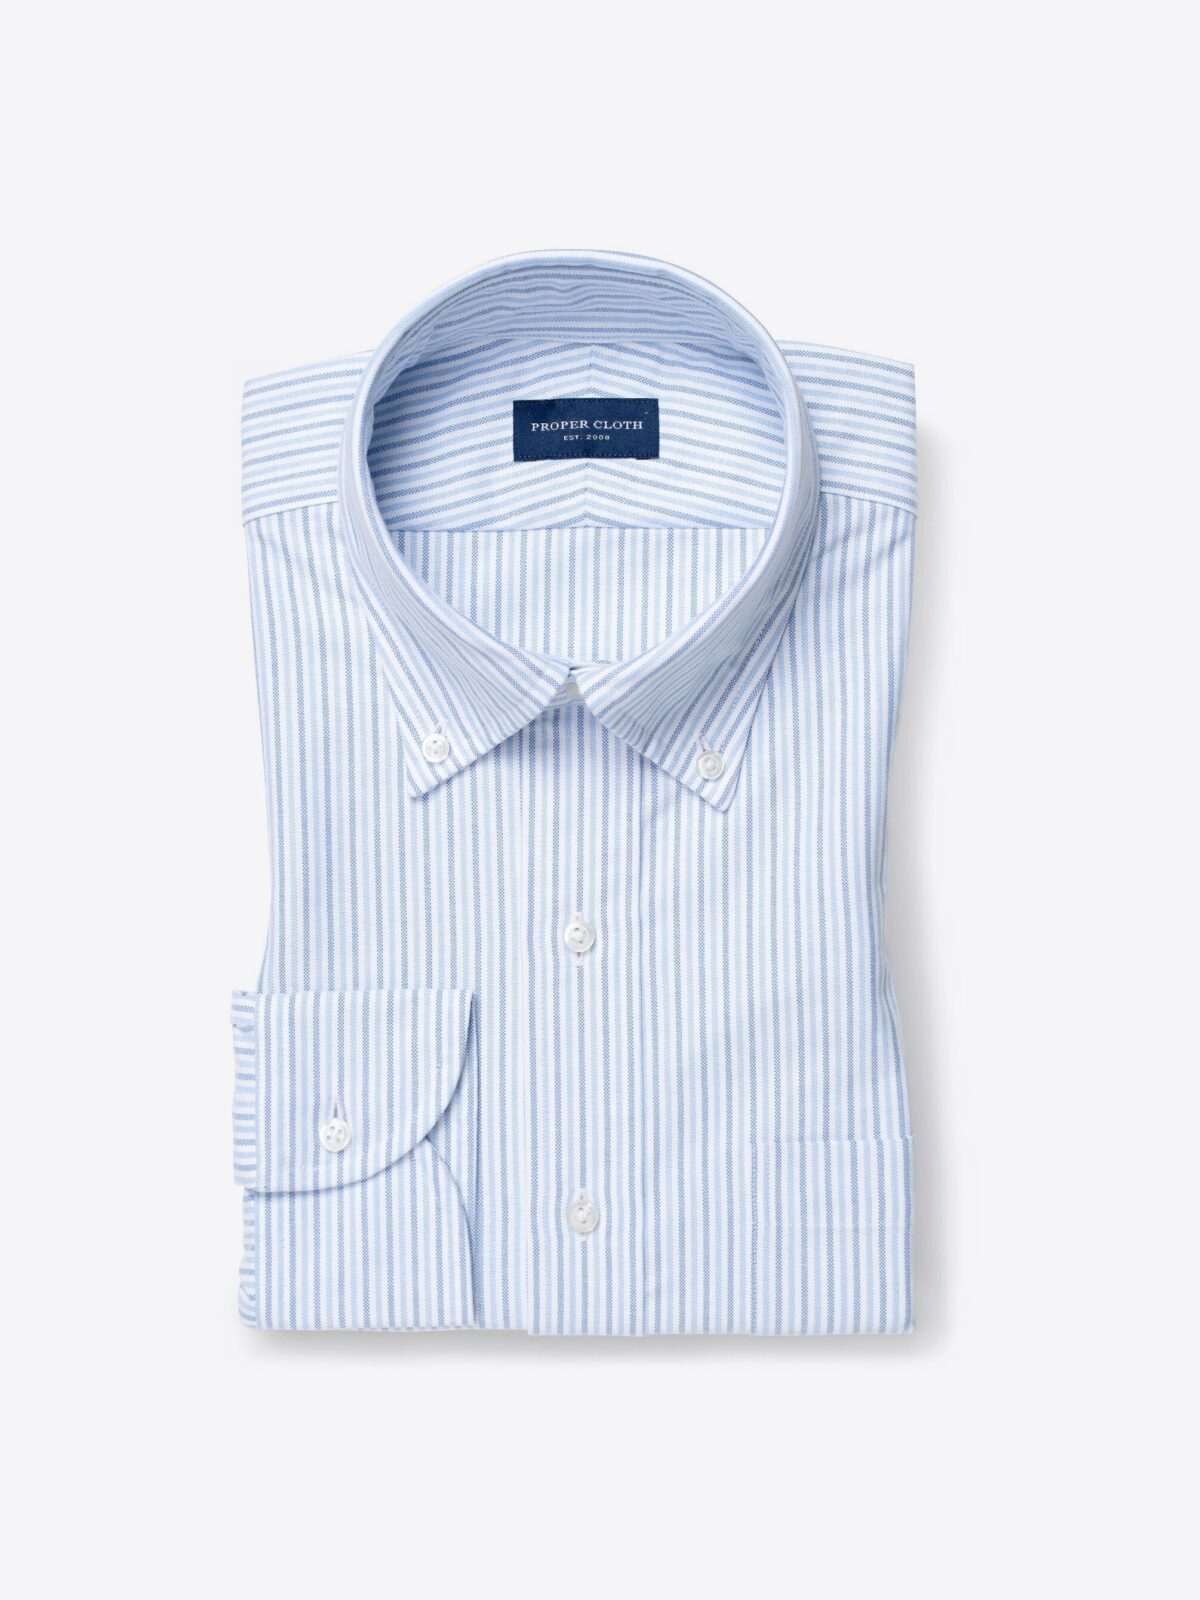 American Pima Light Blue Tonal Striped Oxford Cloth Shirt by Proper Cloth